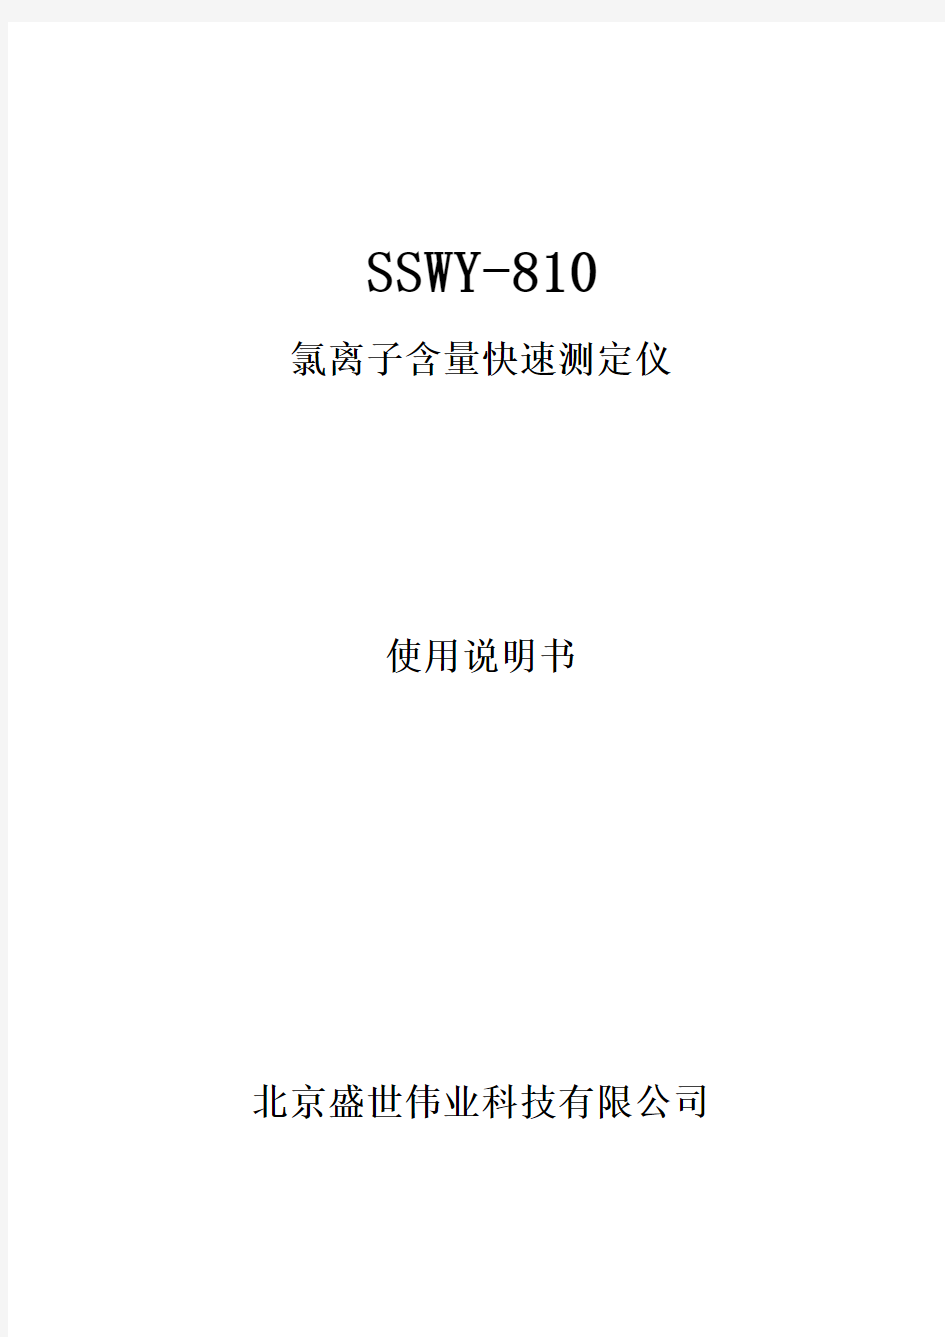 SSWY-810-氯离子含量快速测定仪说明书